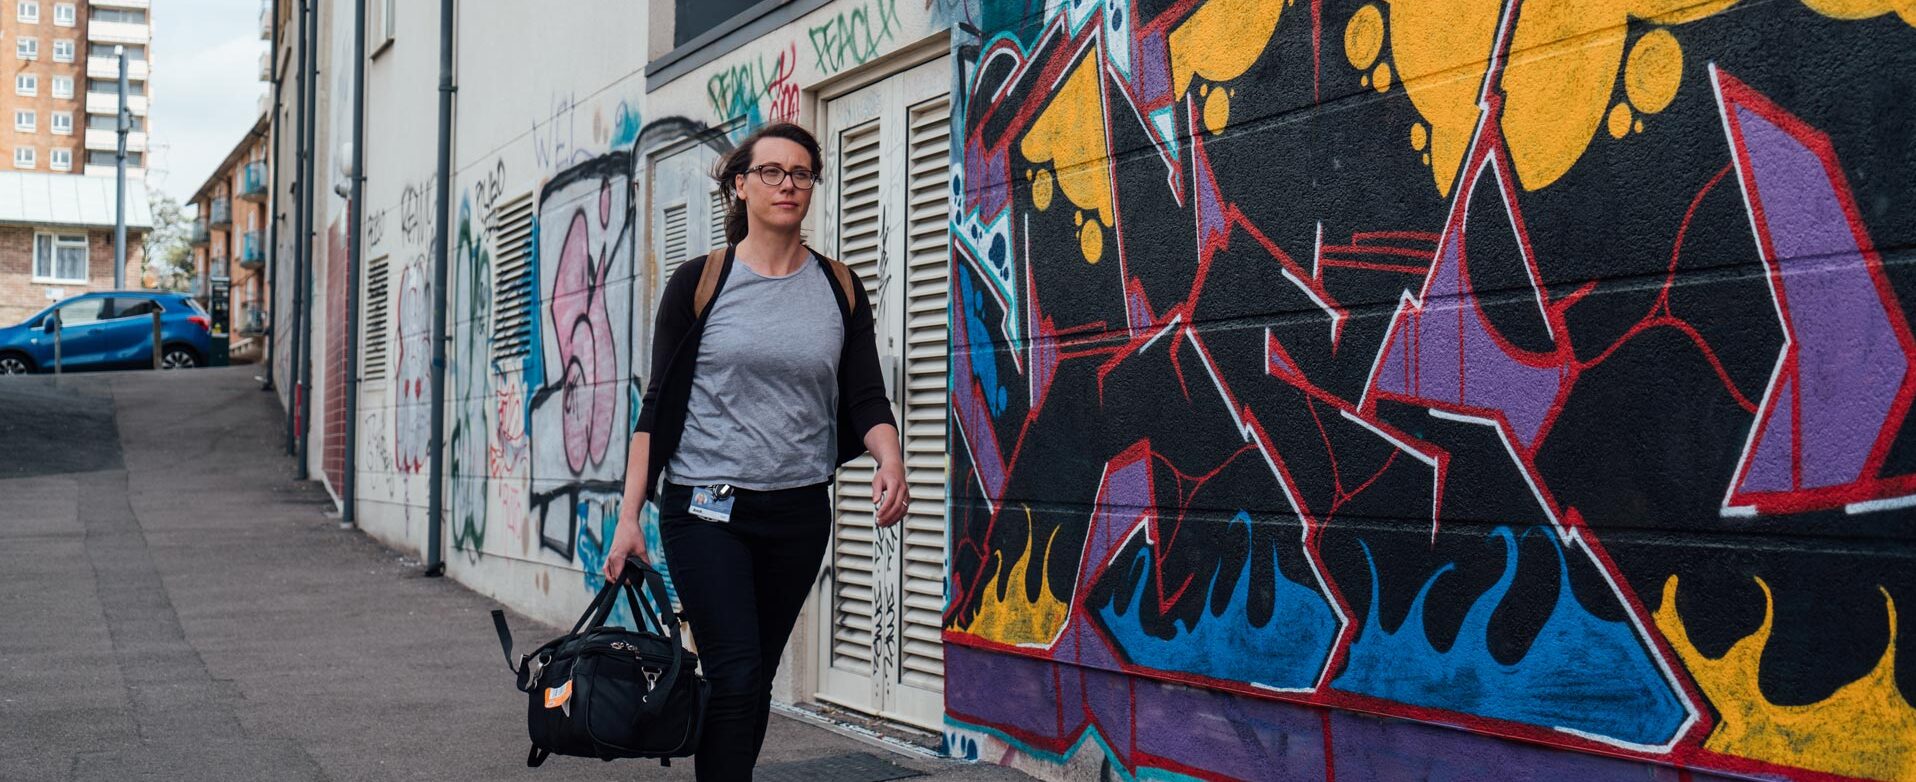 Arch nurse walking past graffitied wall